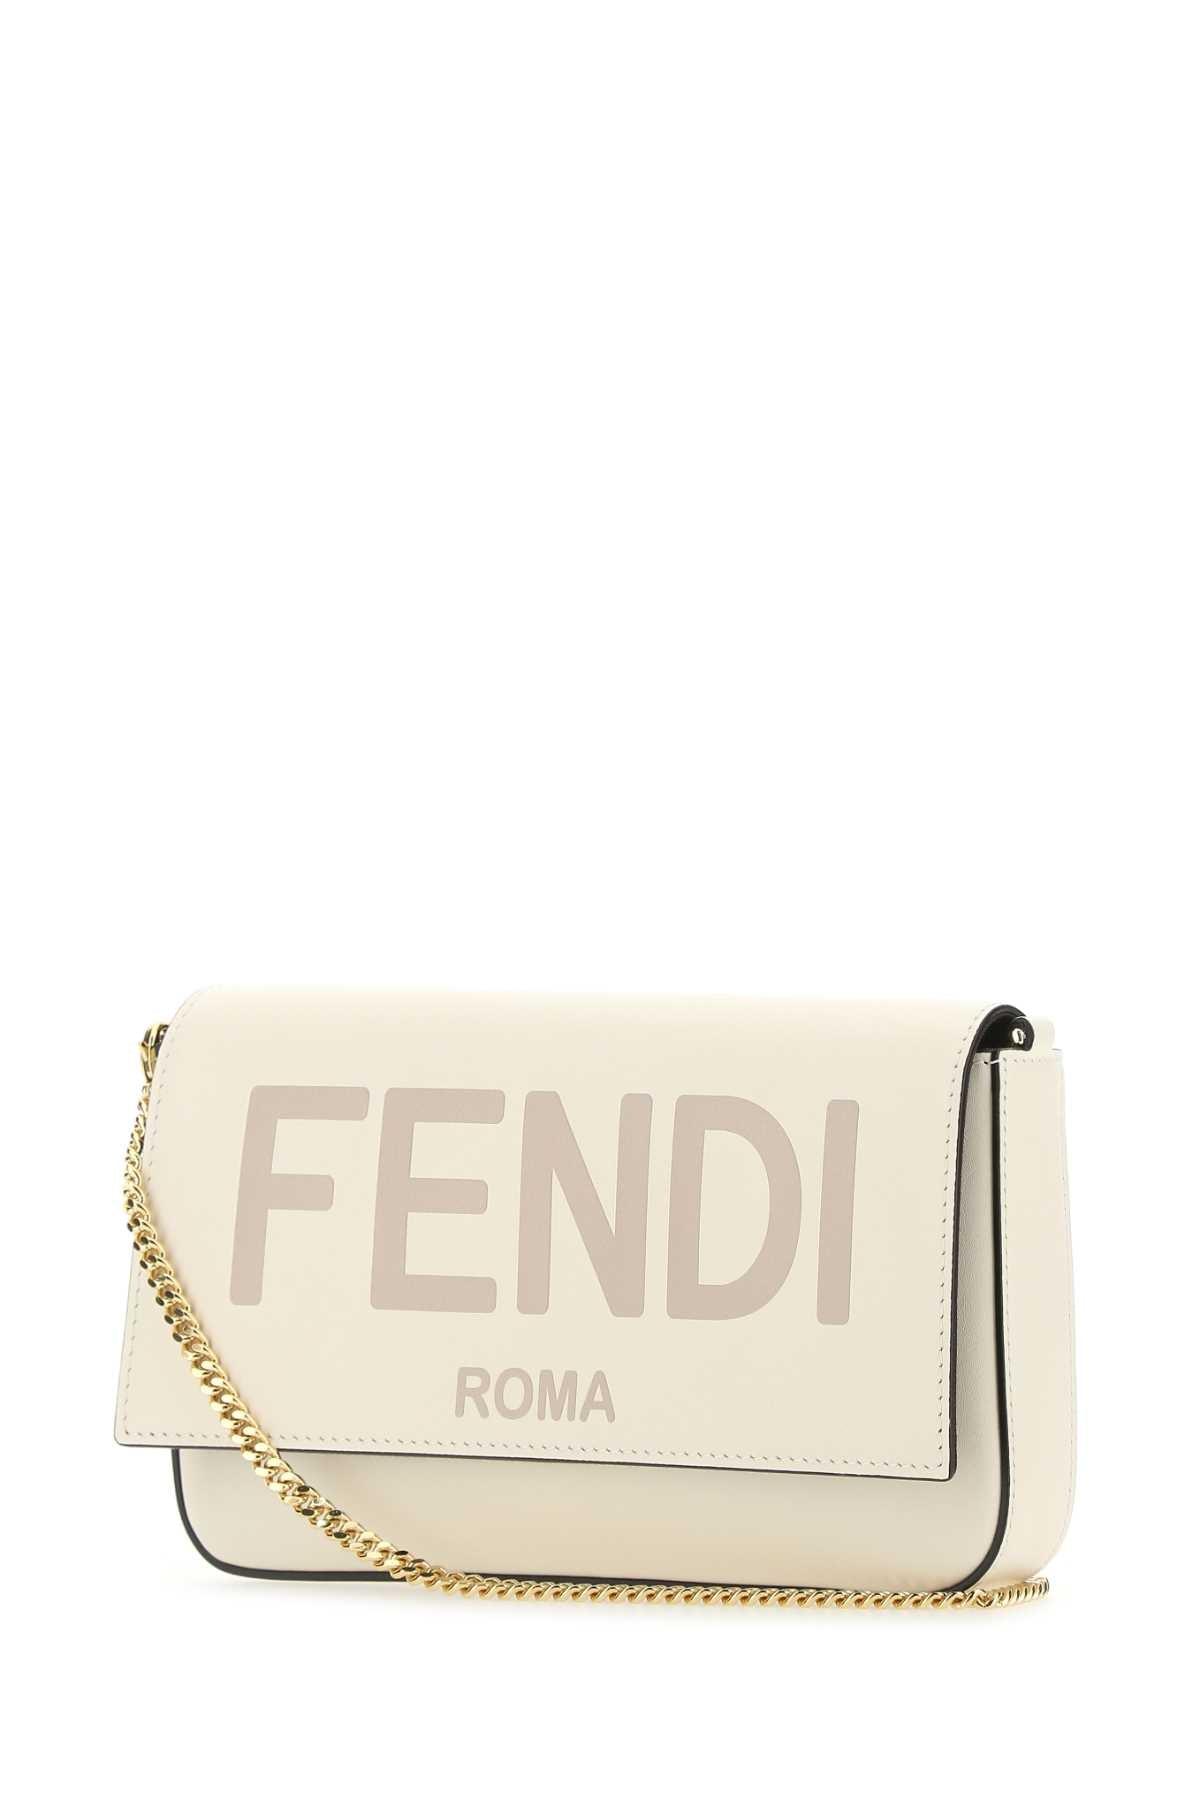 Fendi Logo Chain Strap Shoulder Bag in White